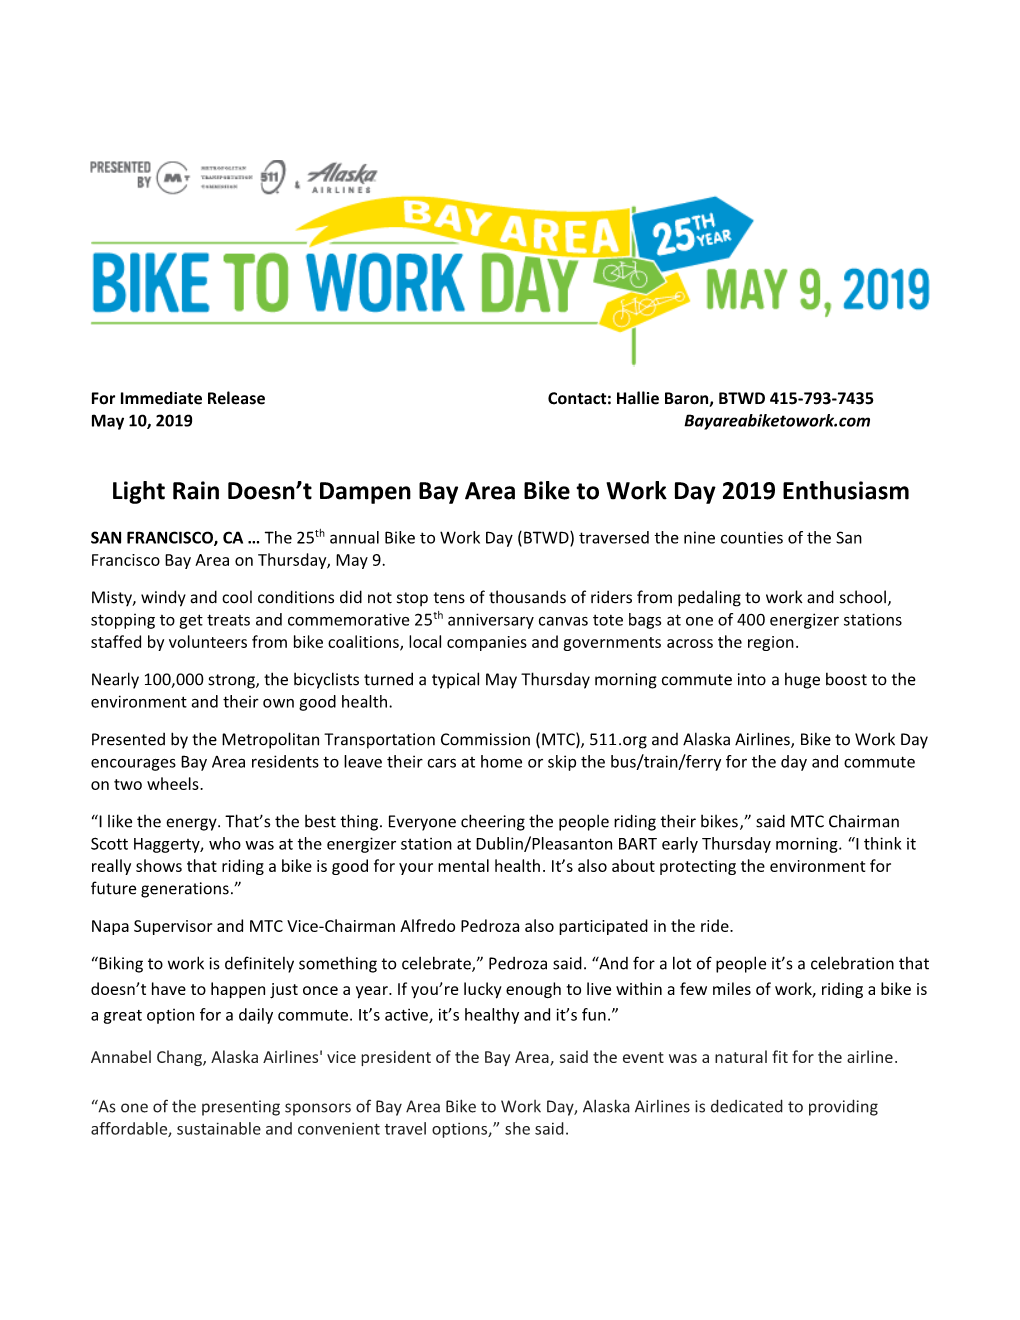 Light Rain Doesn't Dampen Bay Area Bike to Work Day 2019 Enthusiasm